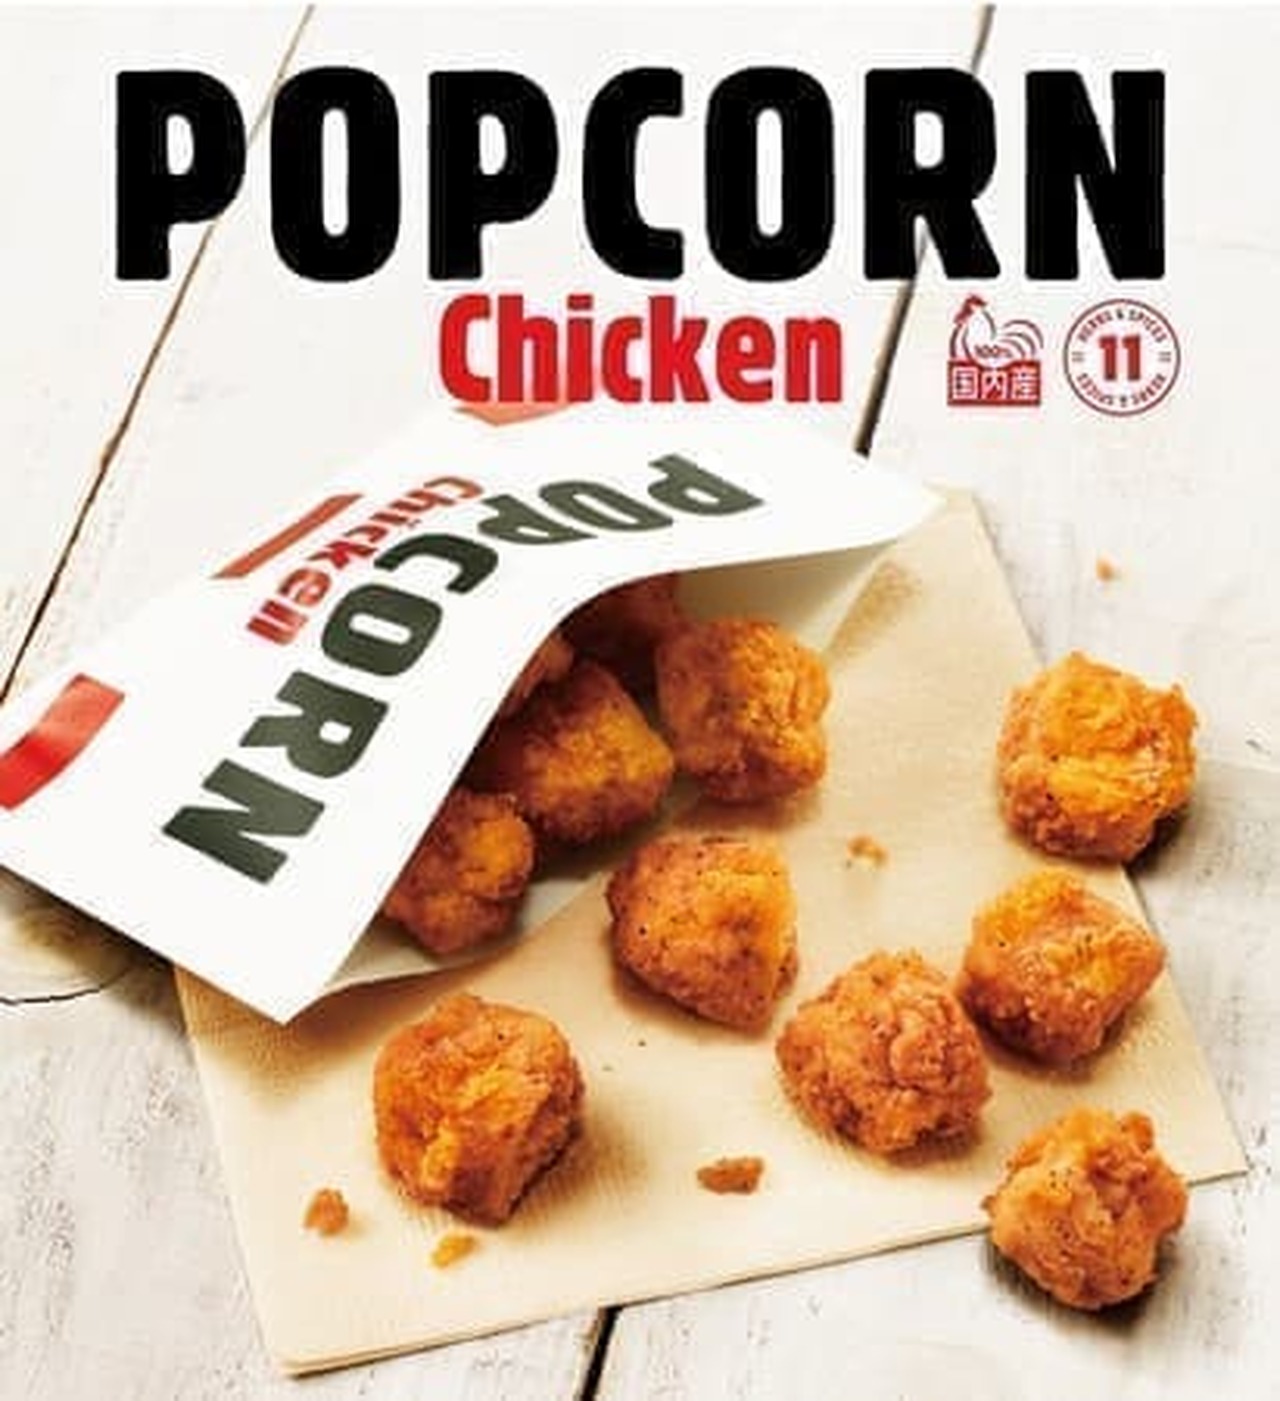 Kentucky "Popcorn Chicken"